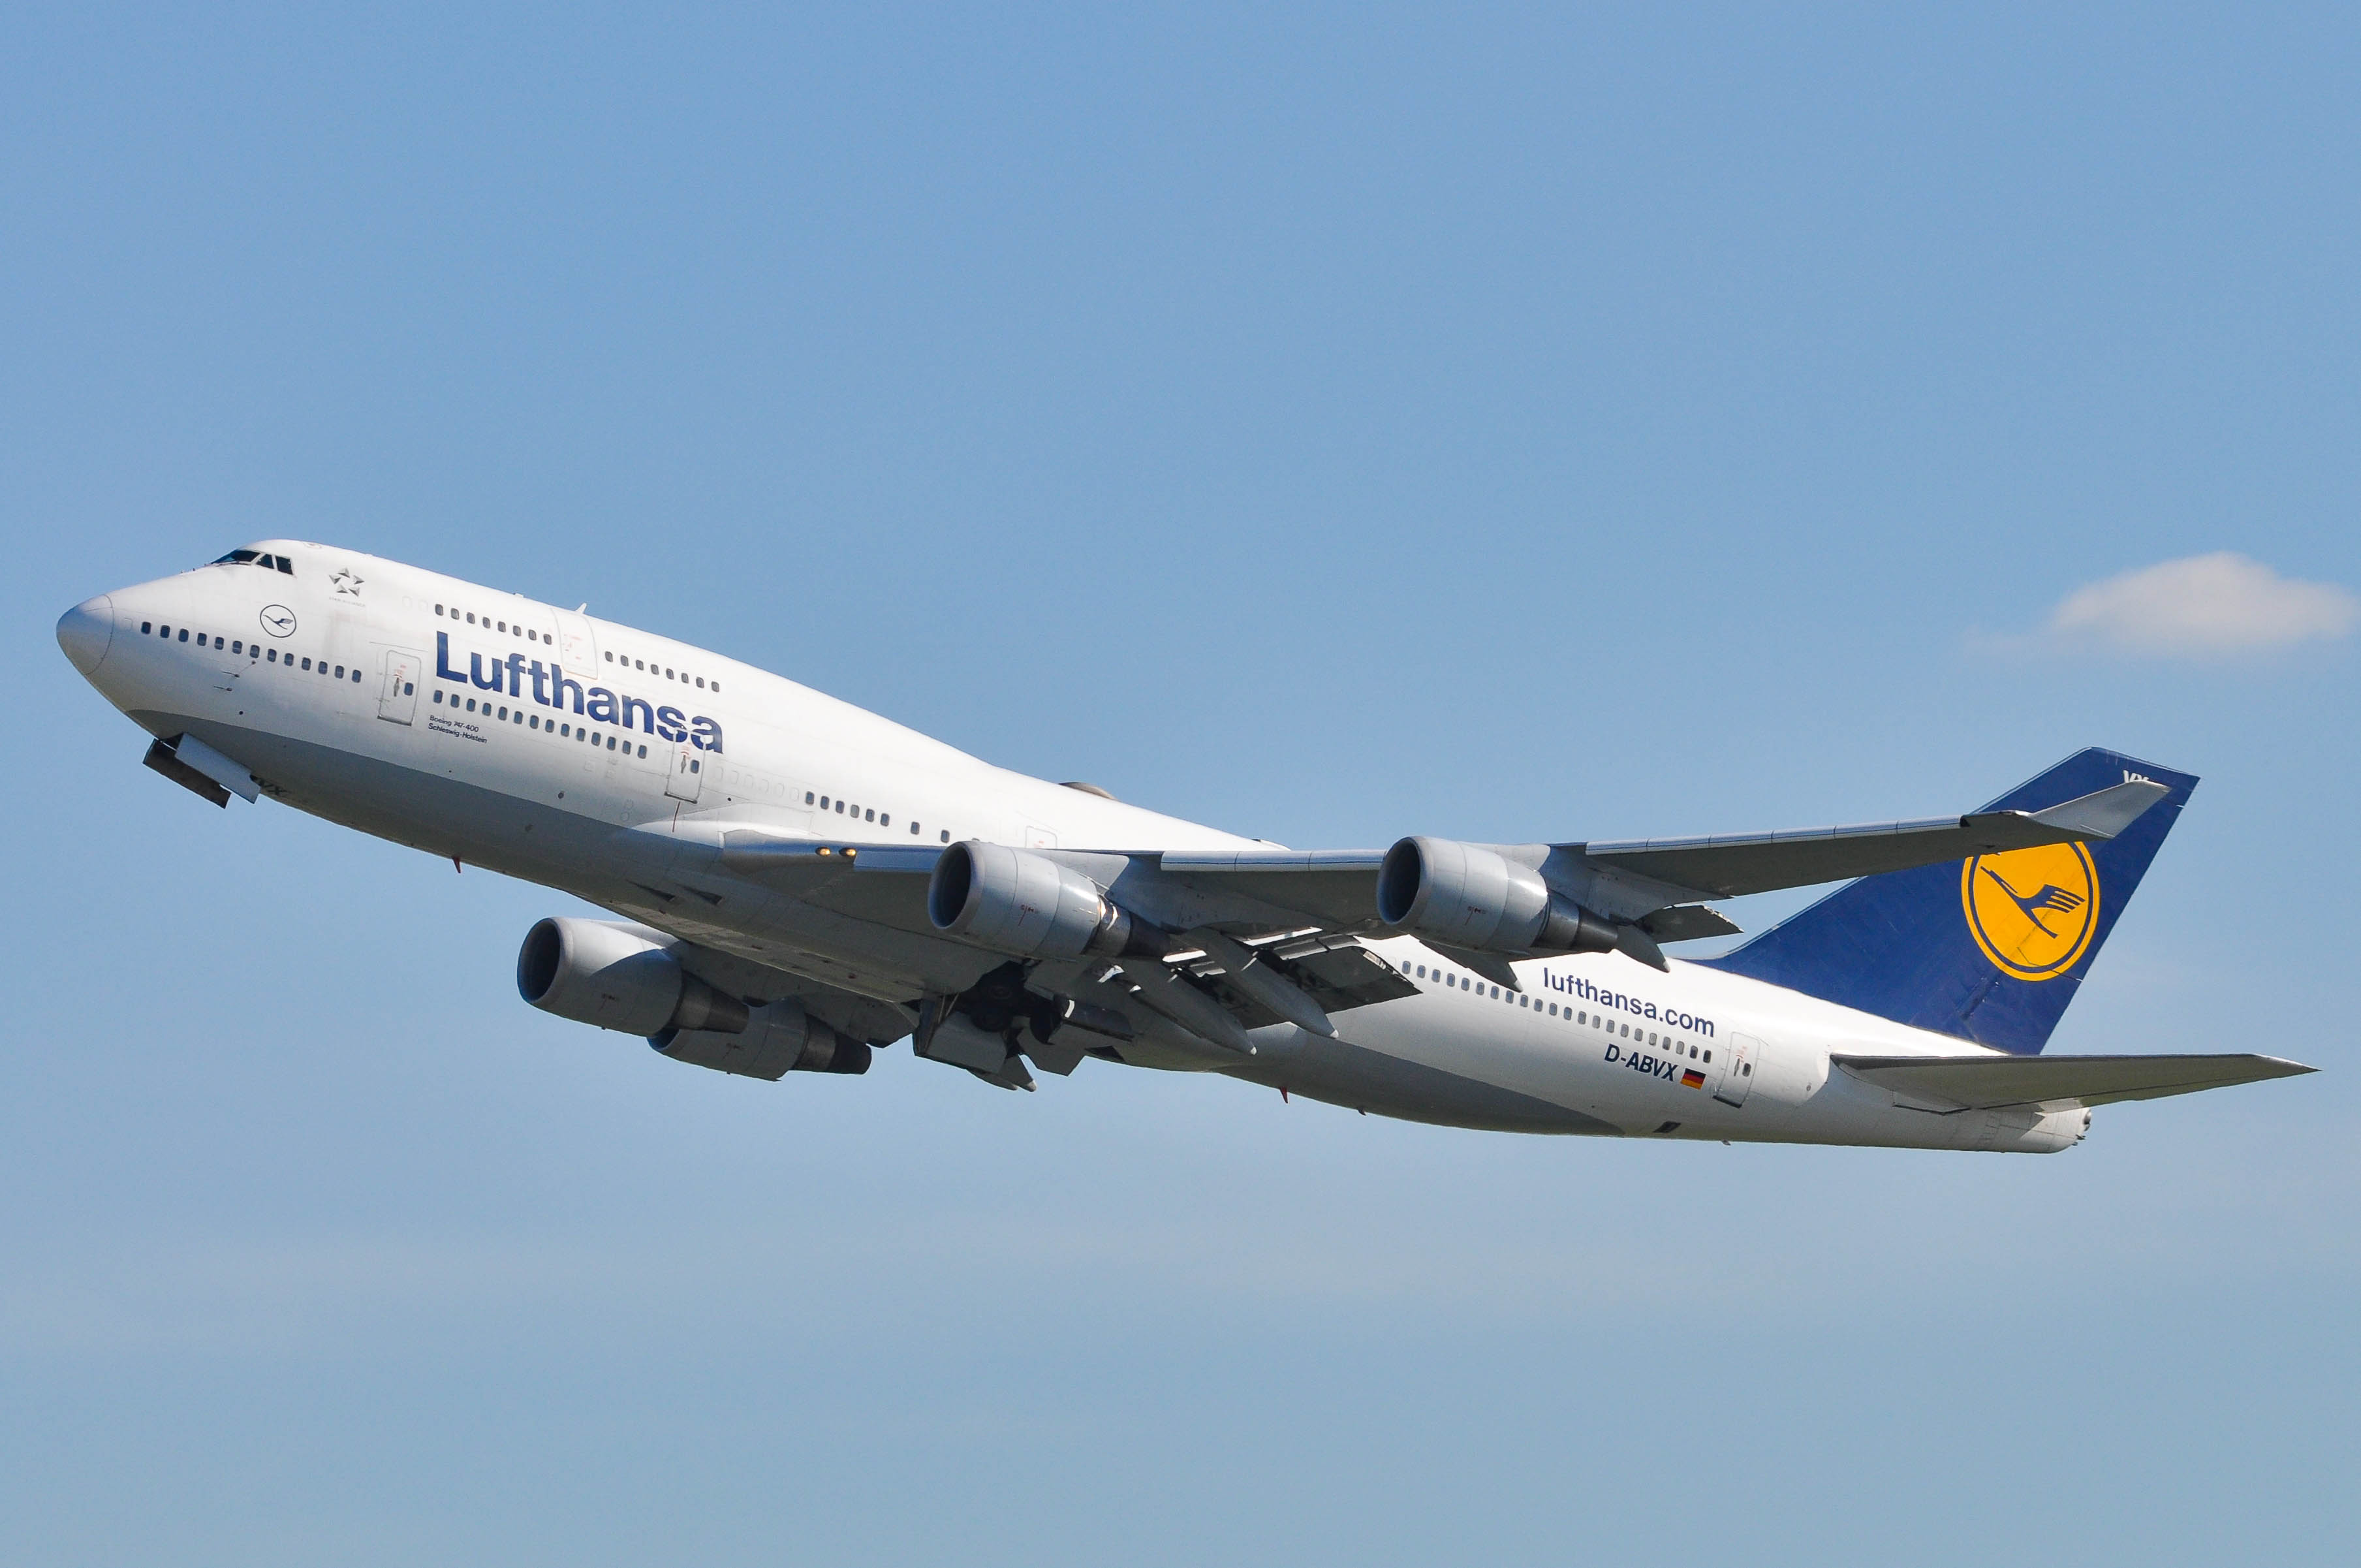 D-ABVX/DABVX Lufthansa Boeing 747 Airframe Information - AVSpotters.com